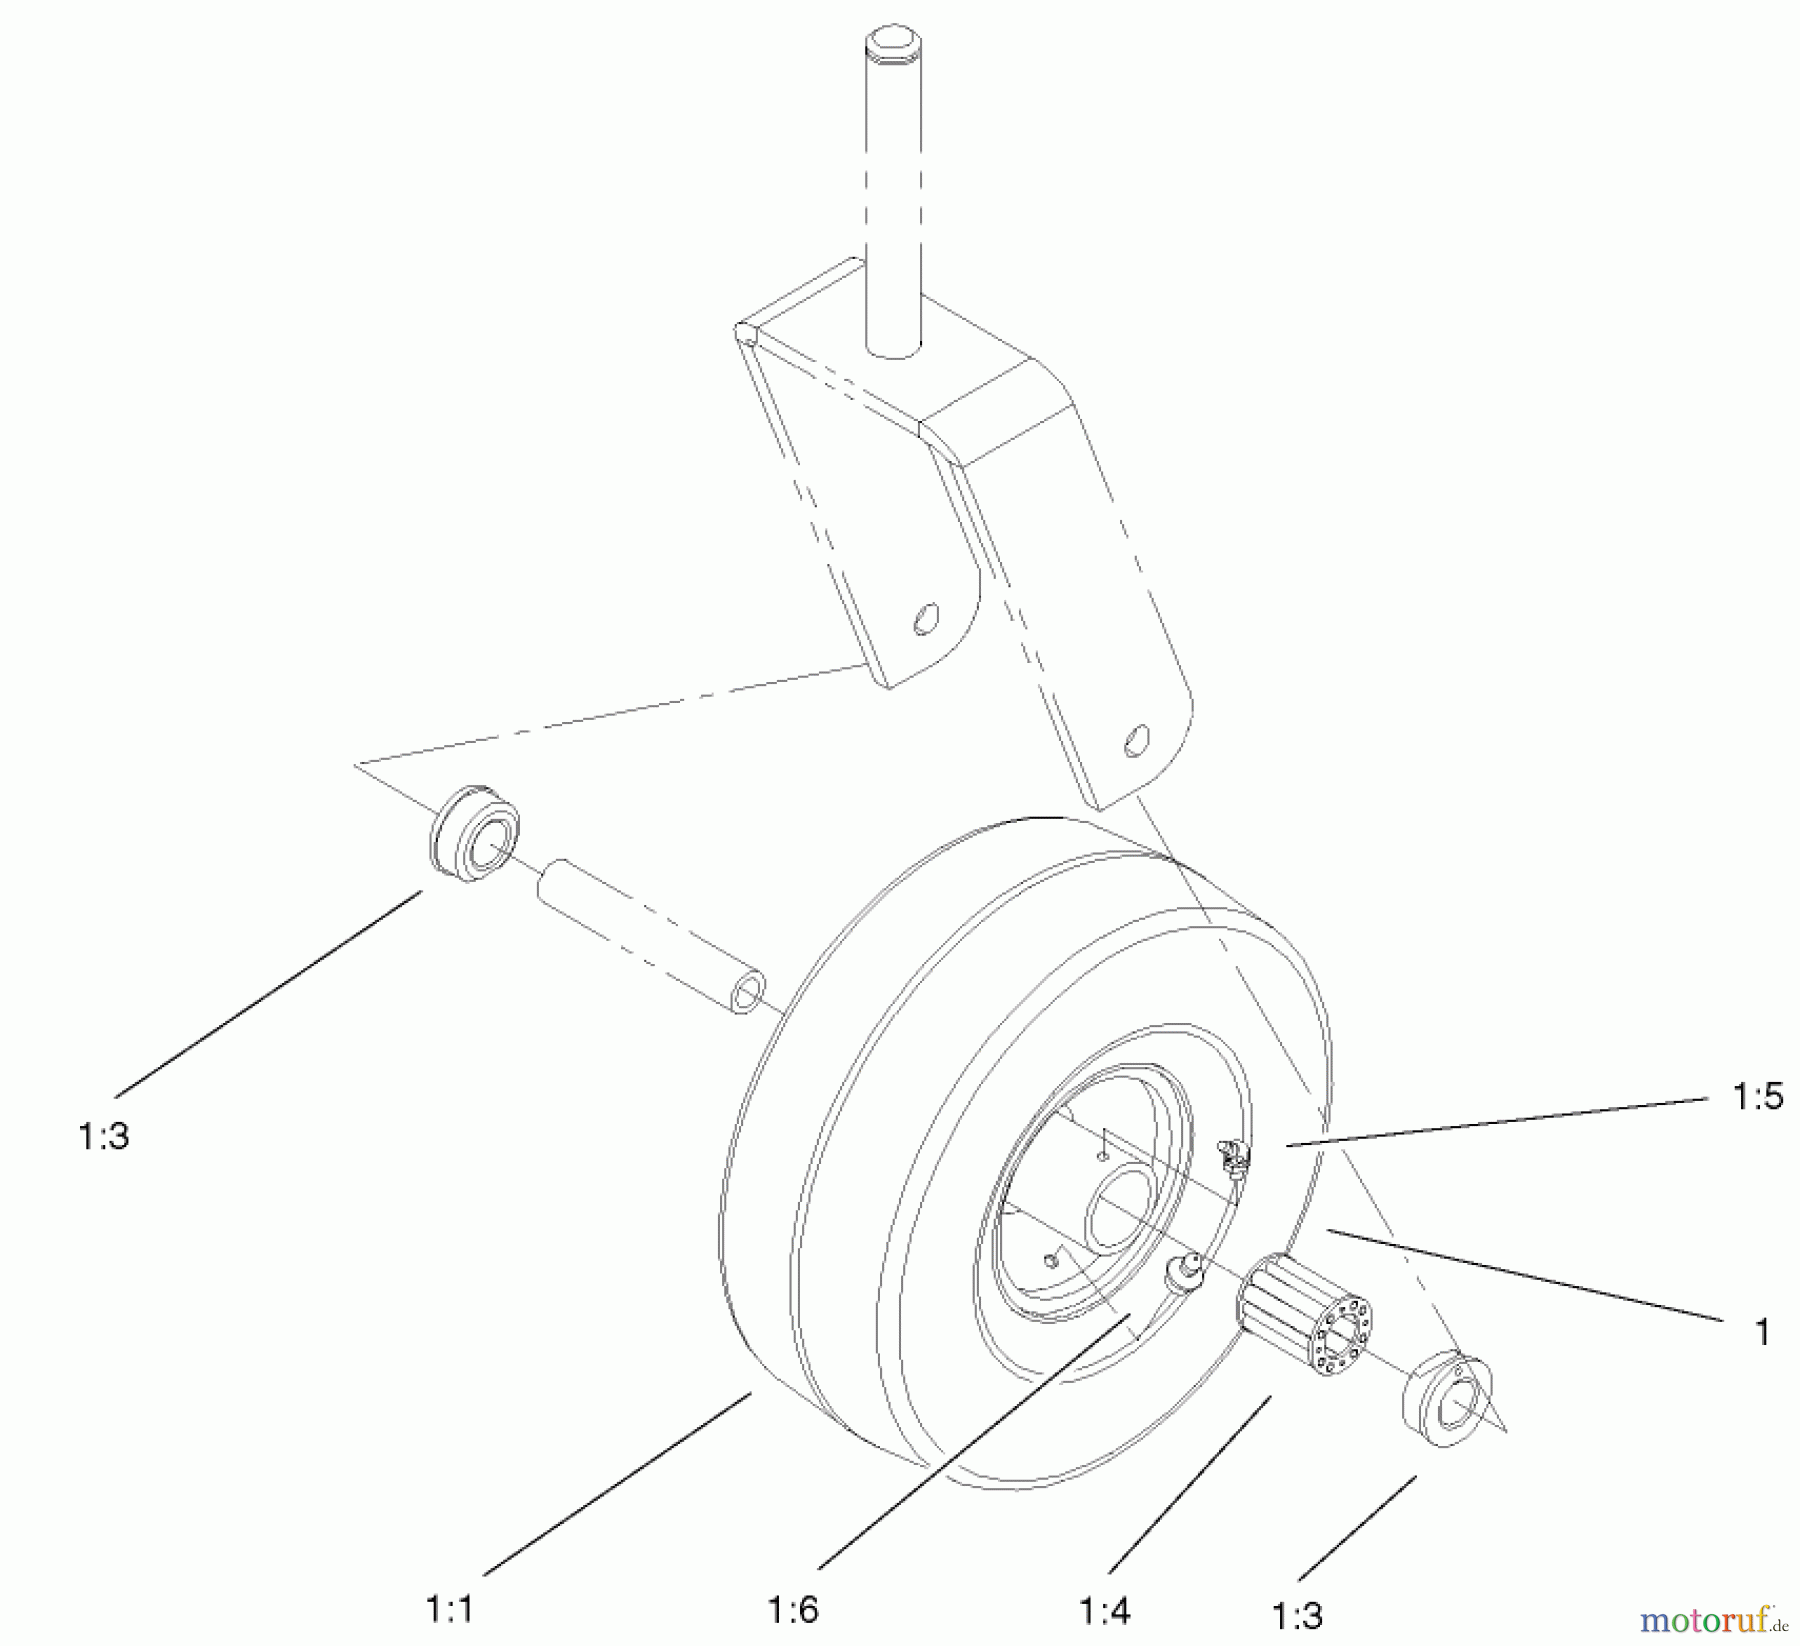  Toro Neu Accessories, Mower 107-9132 - Toro Smooth Caster Wheel Kit, Zero-Turn-Radius Riding Mower CASTER WHEEL ASSEMBLY